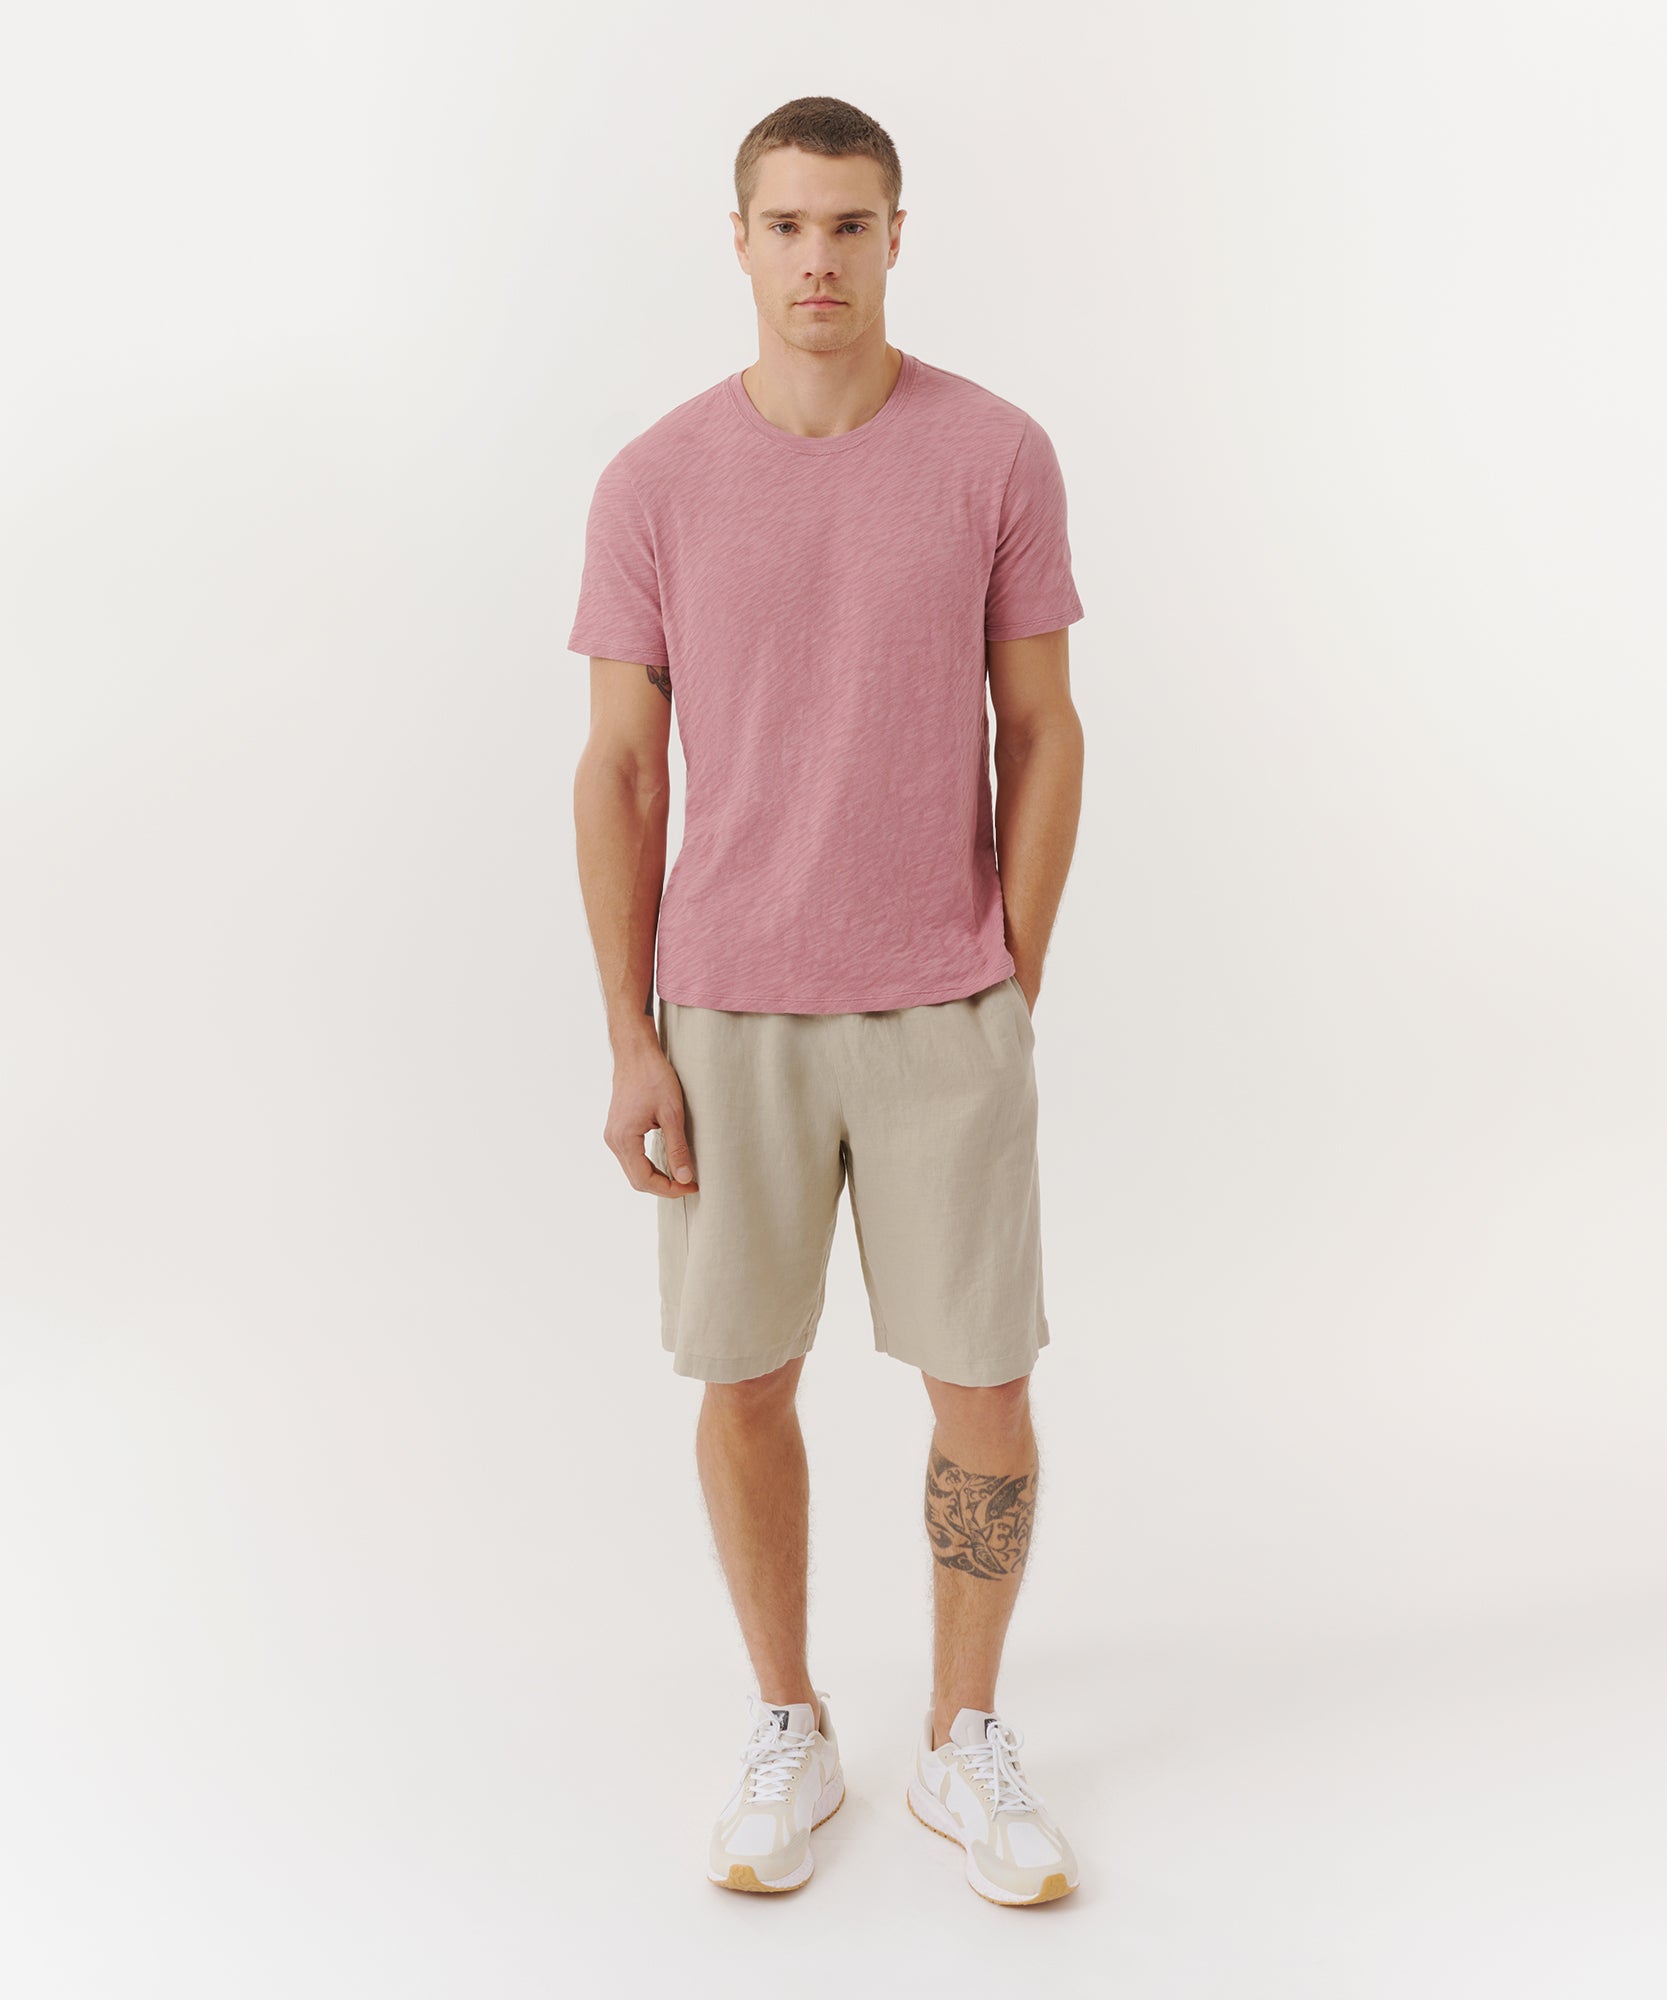 Men's Shorts, Jersey, Cotton & Summer Shorts